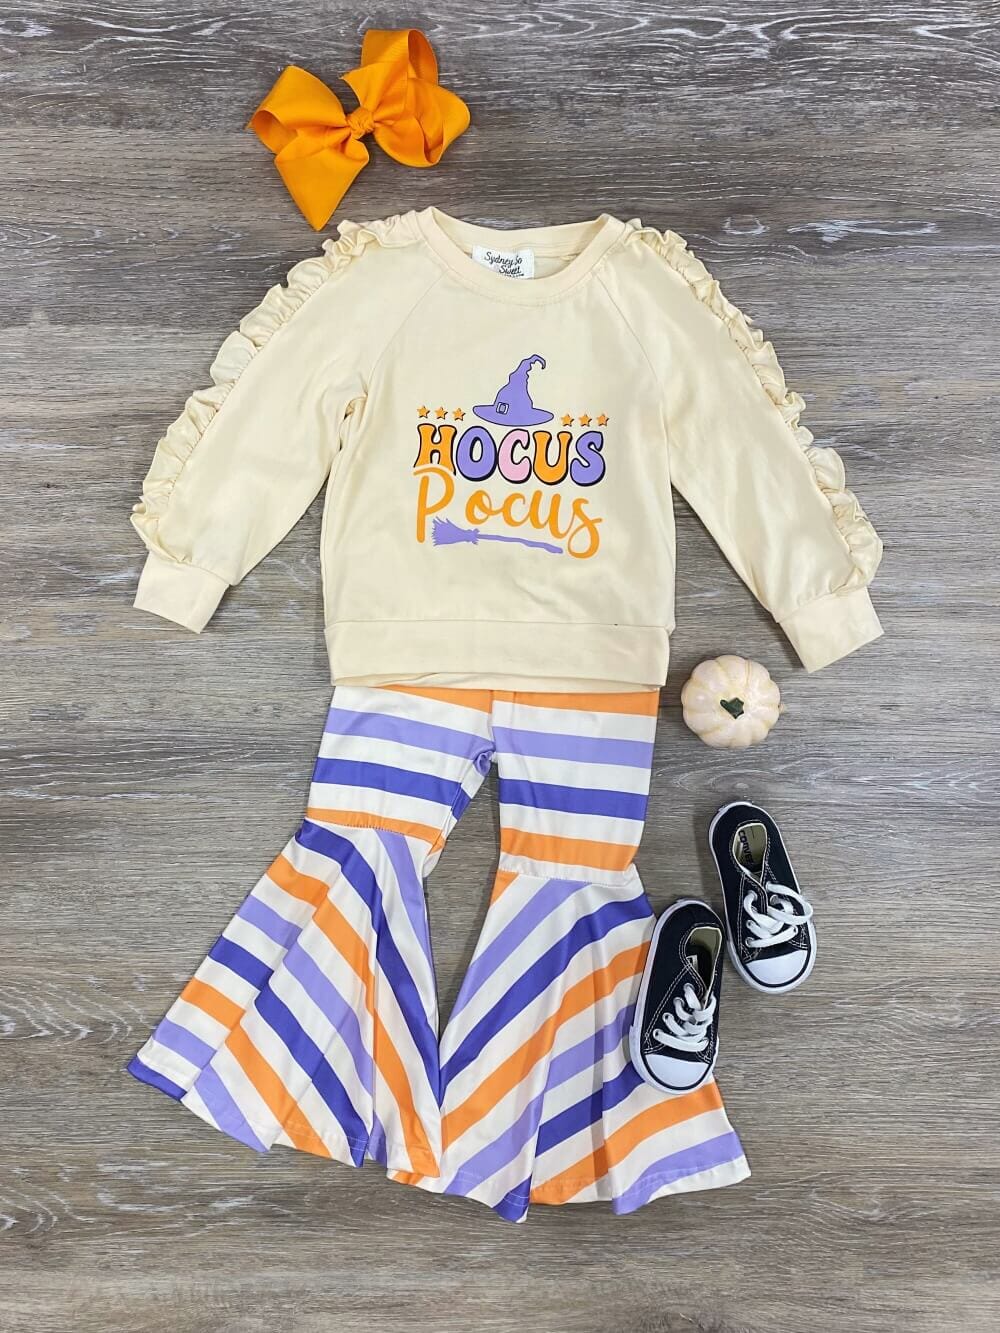 Hocus Pocus Orange & Purple Stripe Witch Girls Bell Bottom Outfit - Sydney So Sweet